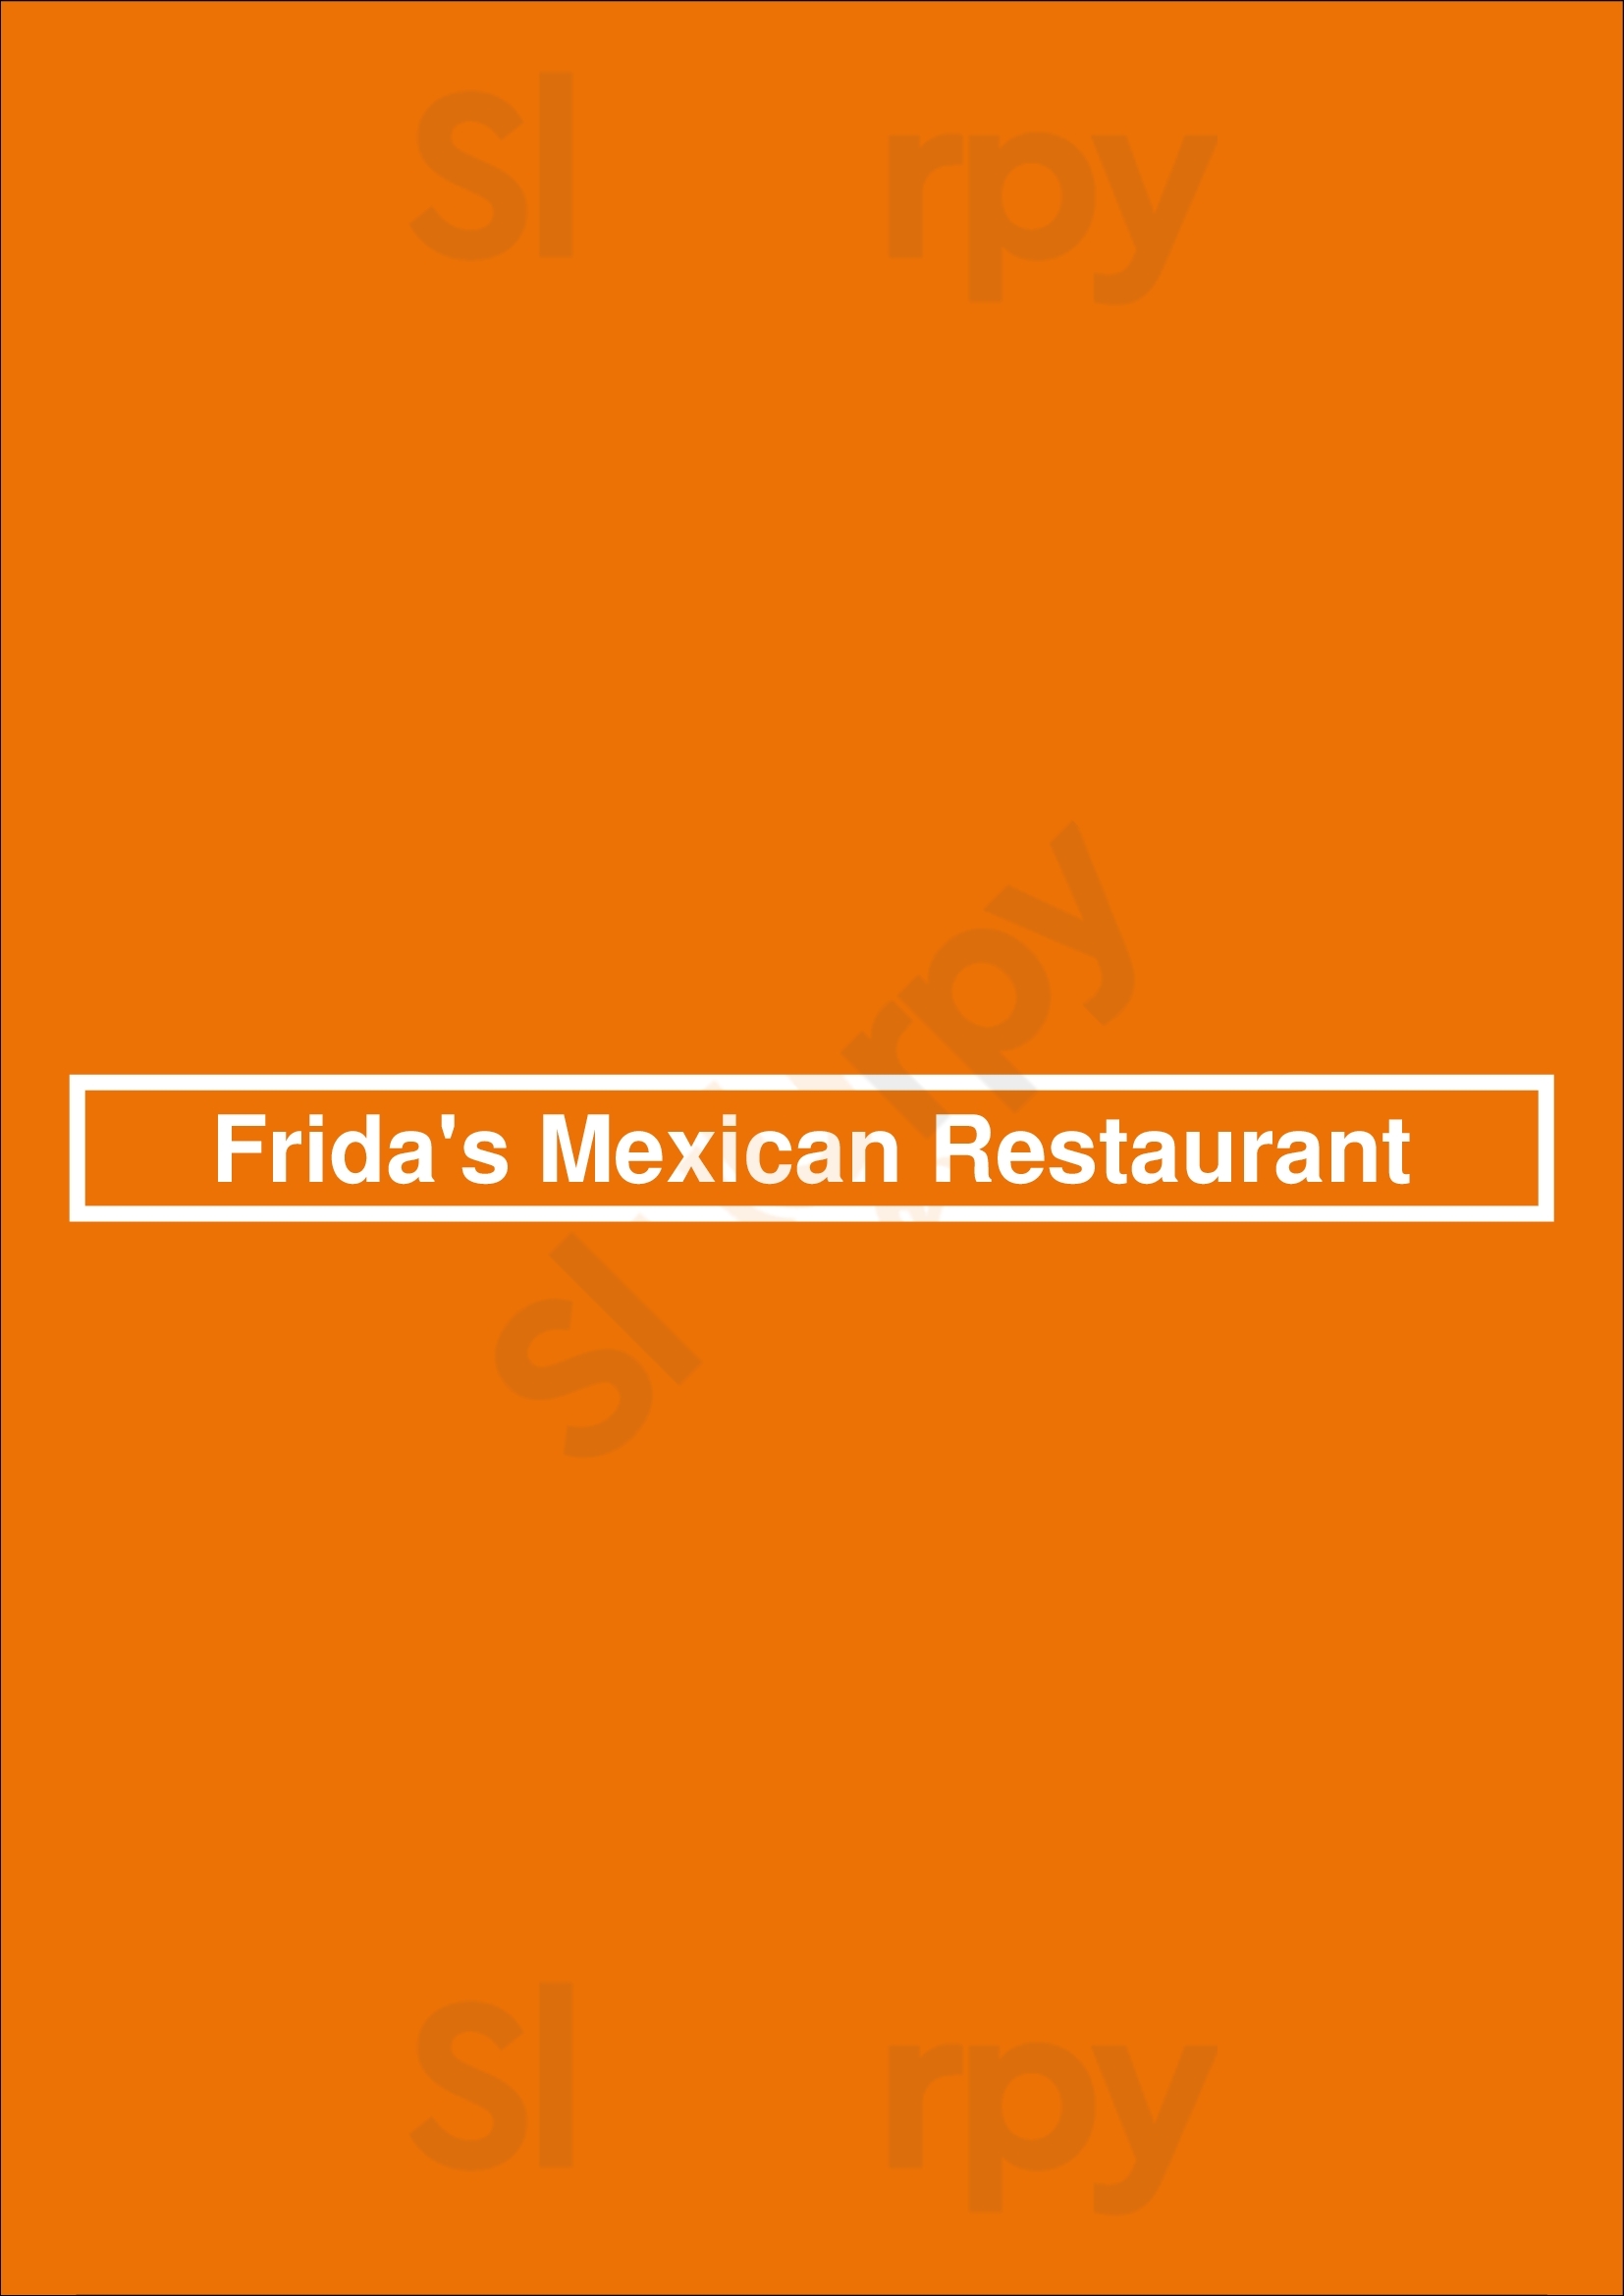 Frida's Mexican Restaurant Collierville Menu - 1